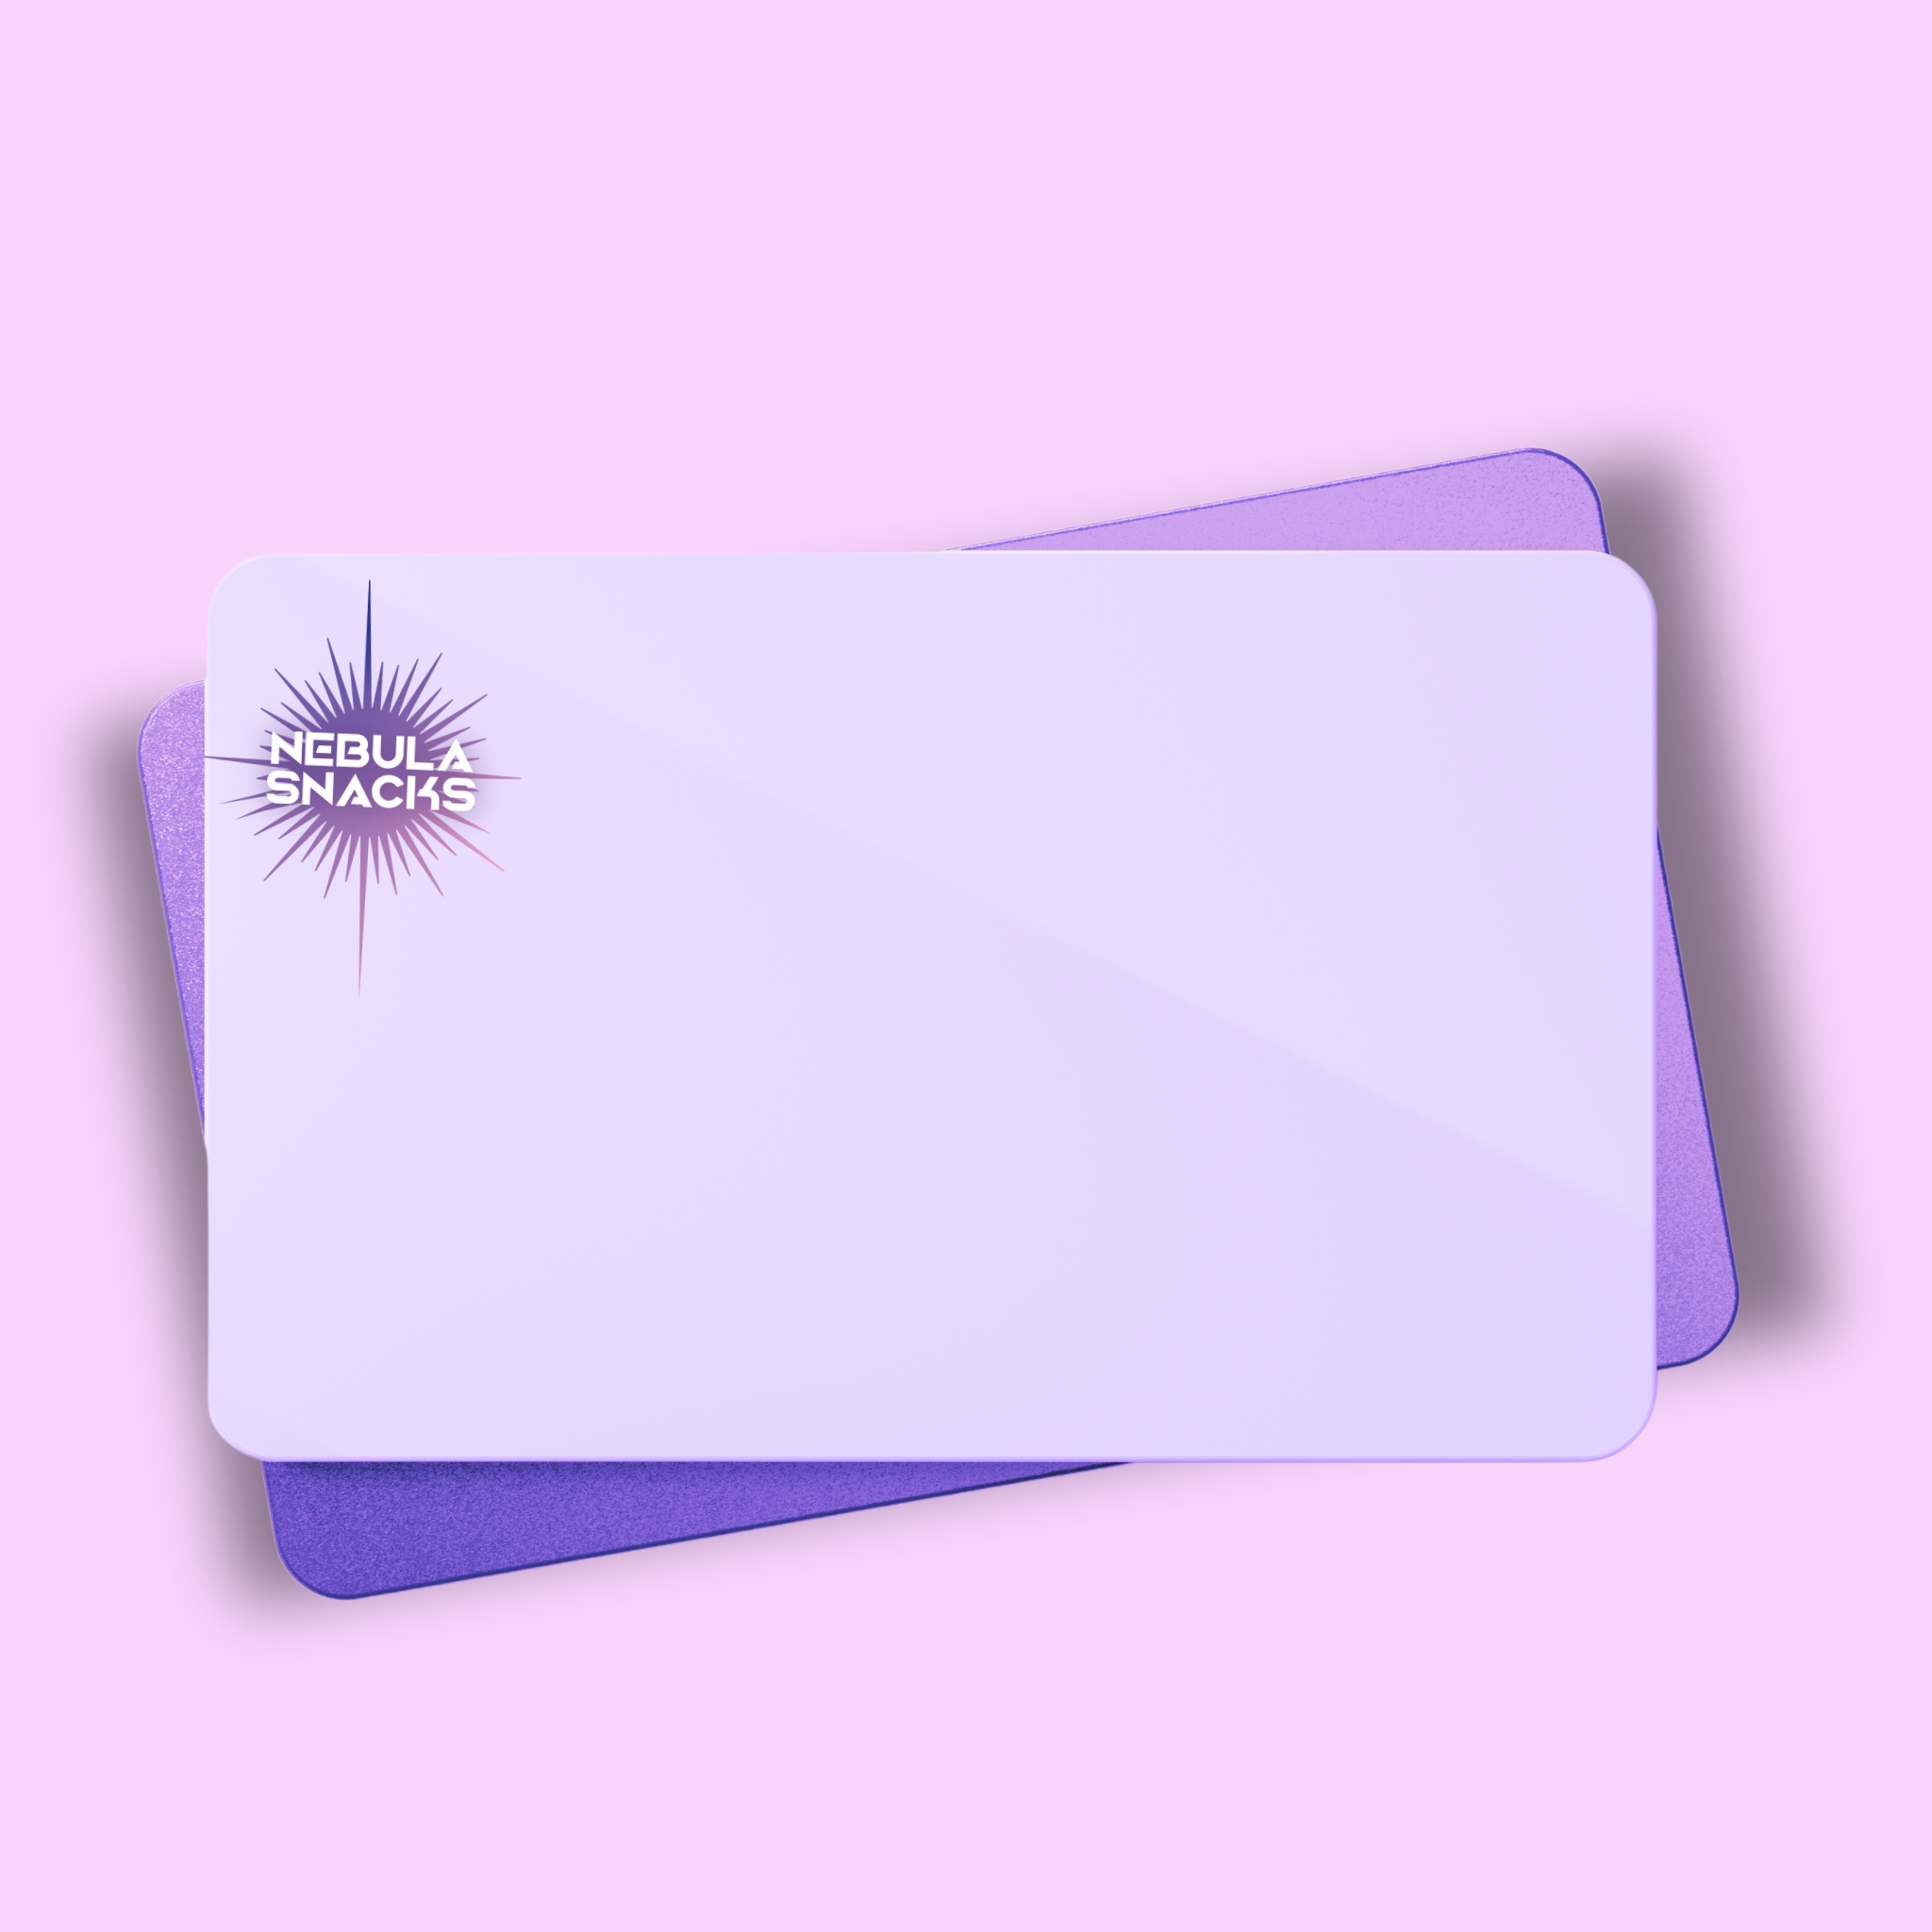 Nebula Snacks Gift Card